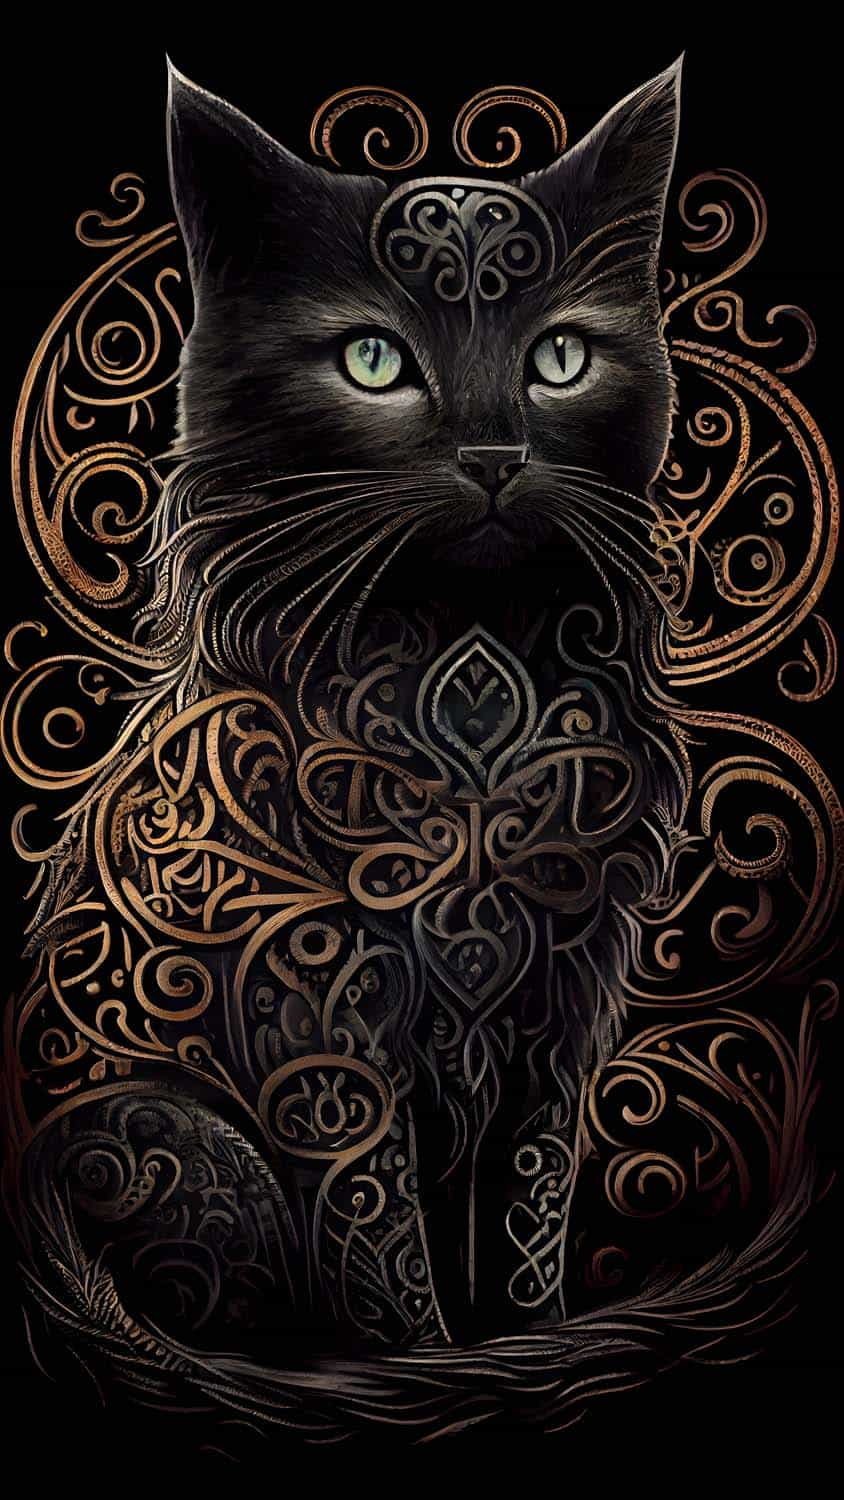 Black Cat IPhone Wallpaper HD  IPhone Wallpapers